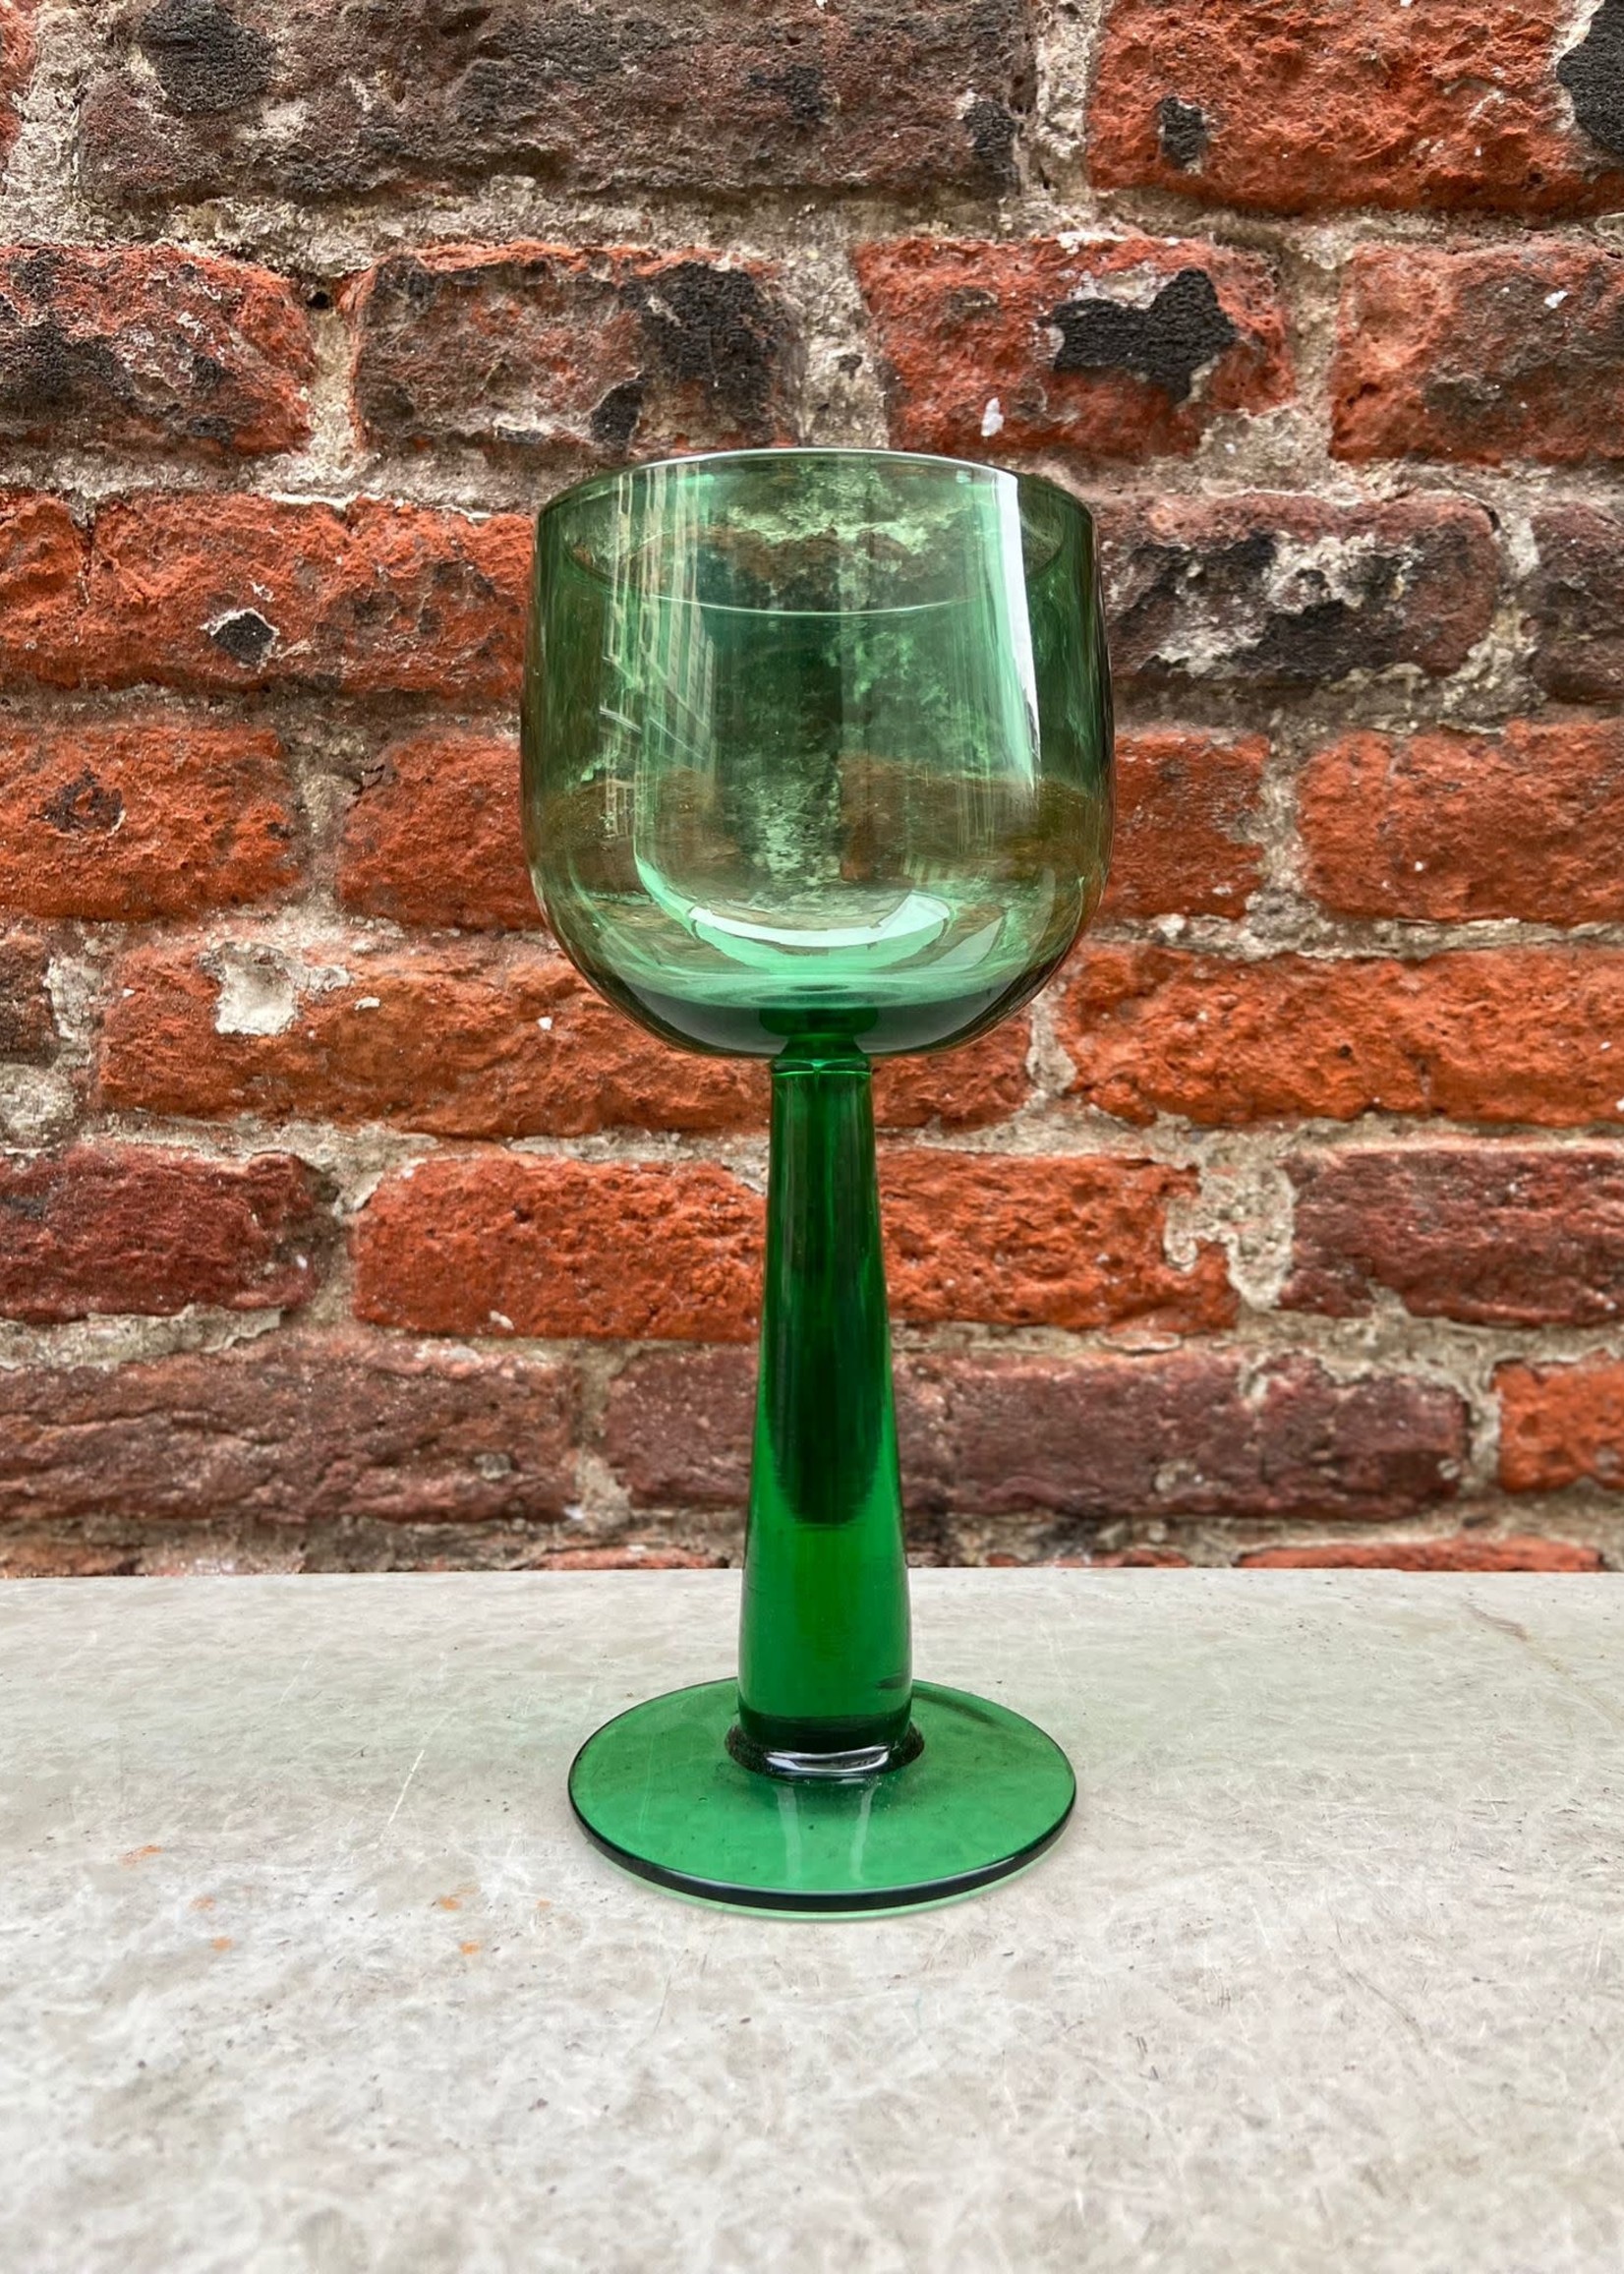 HKliving USA AGL4472 The Emeralds olive green wine glass tall stem